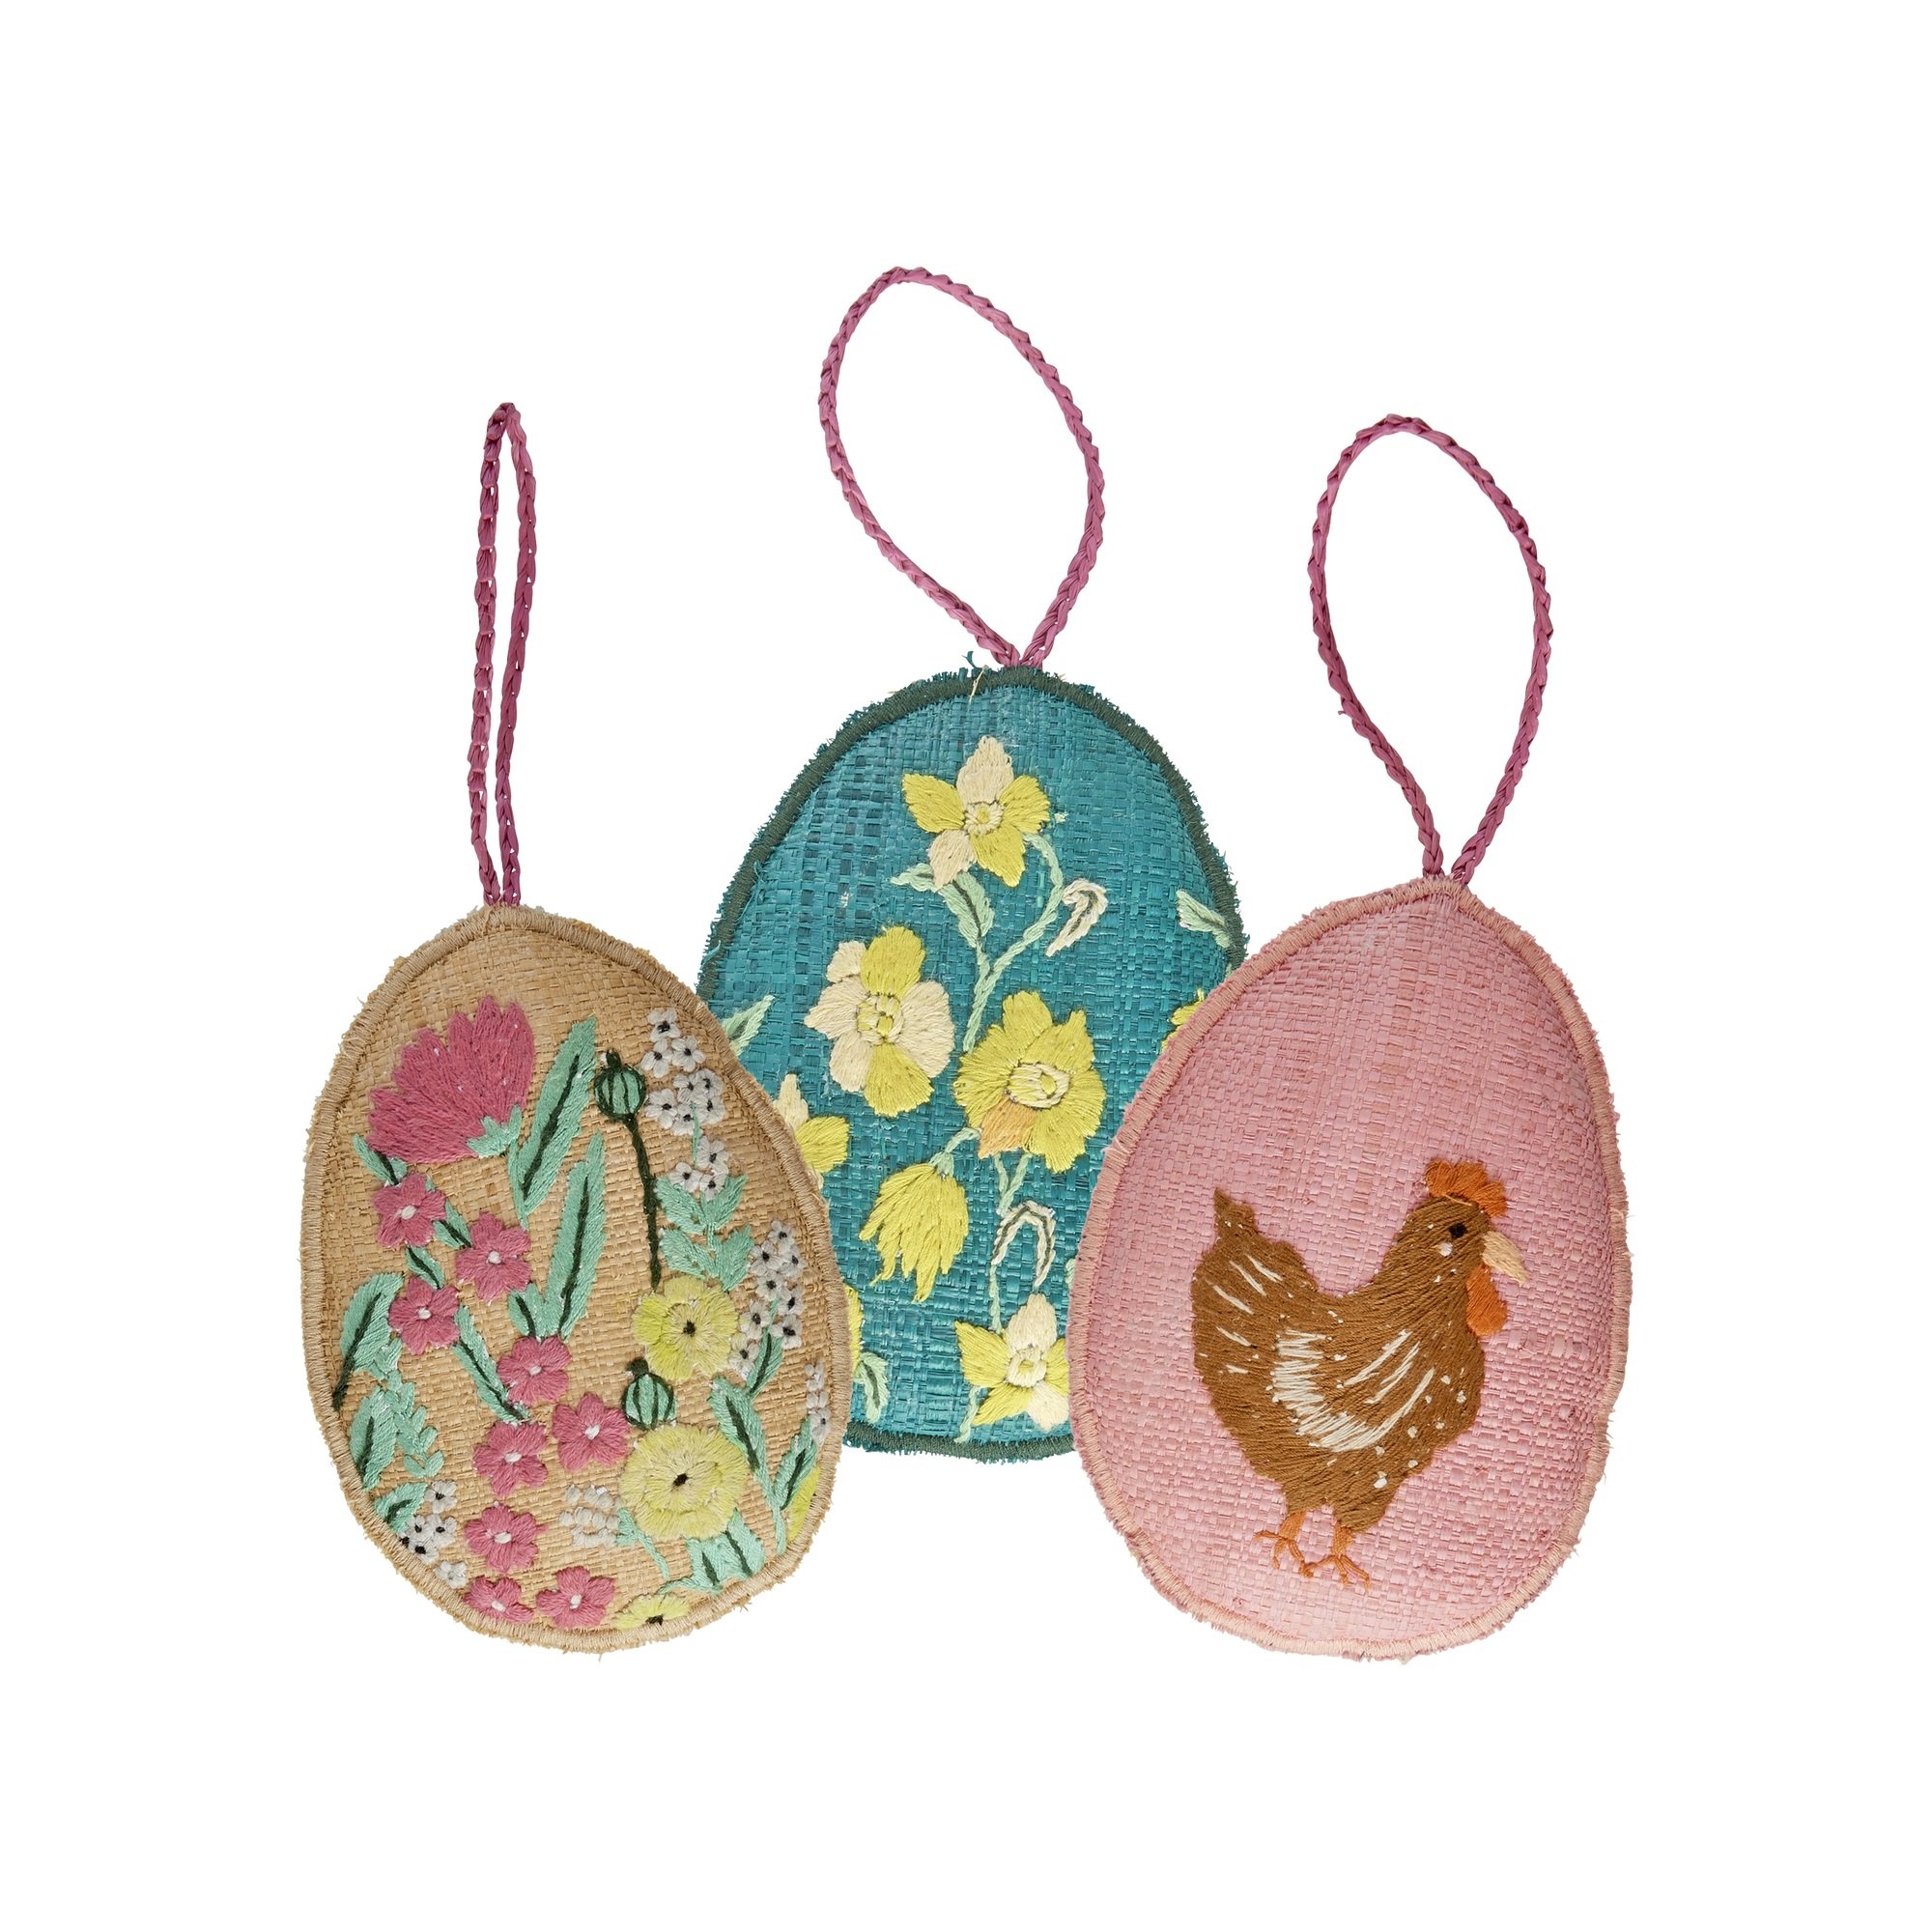 Rice - Raffia Large Easter Eggs Ornaments 3 Asst. Designs with Embroidery Pink/Yellow/Blue - Hjemme og kjøkken